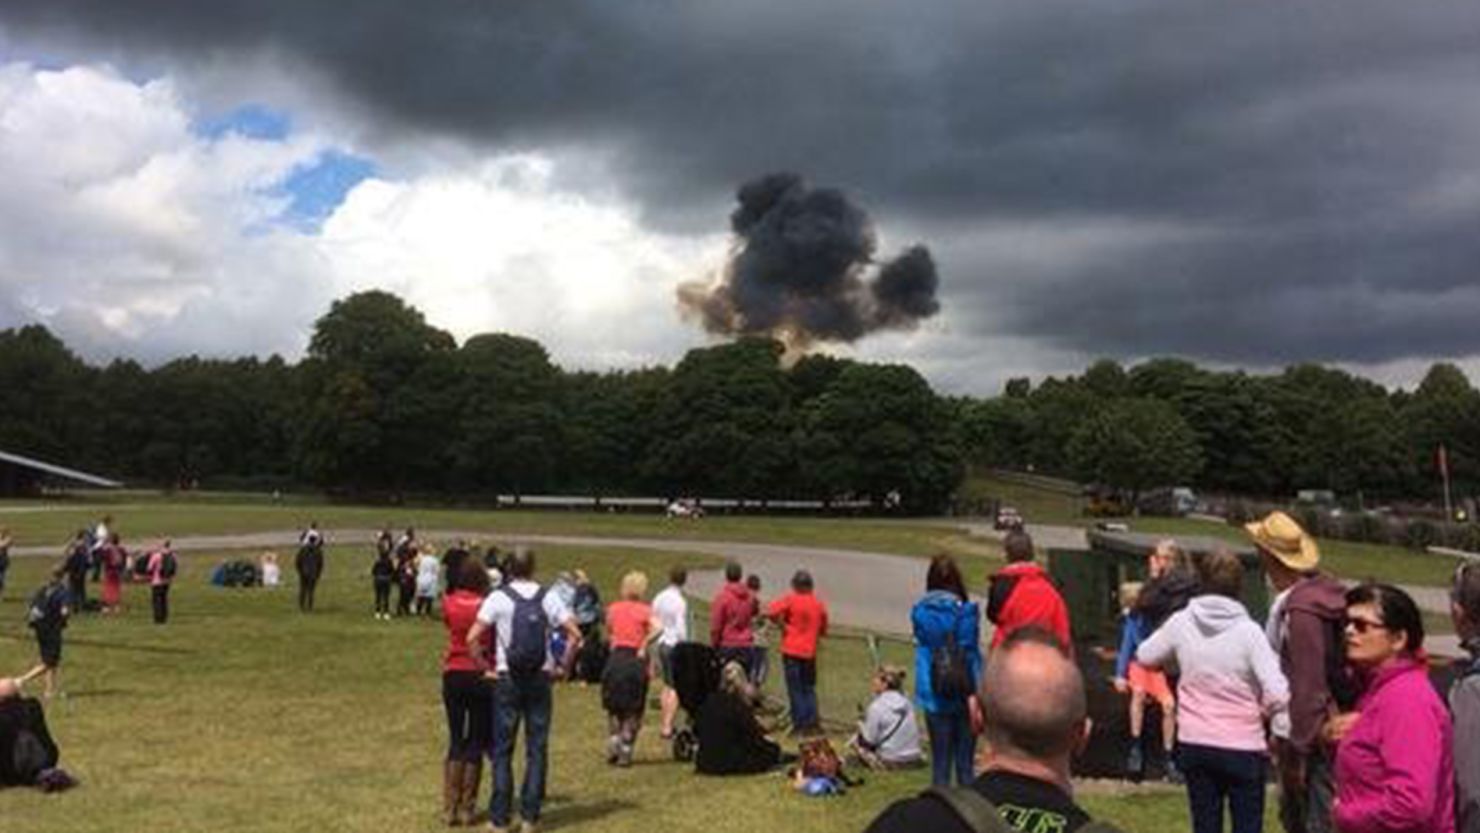 Twitter user @roylsmith shared this image of the plane crash.